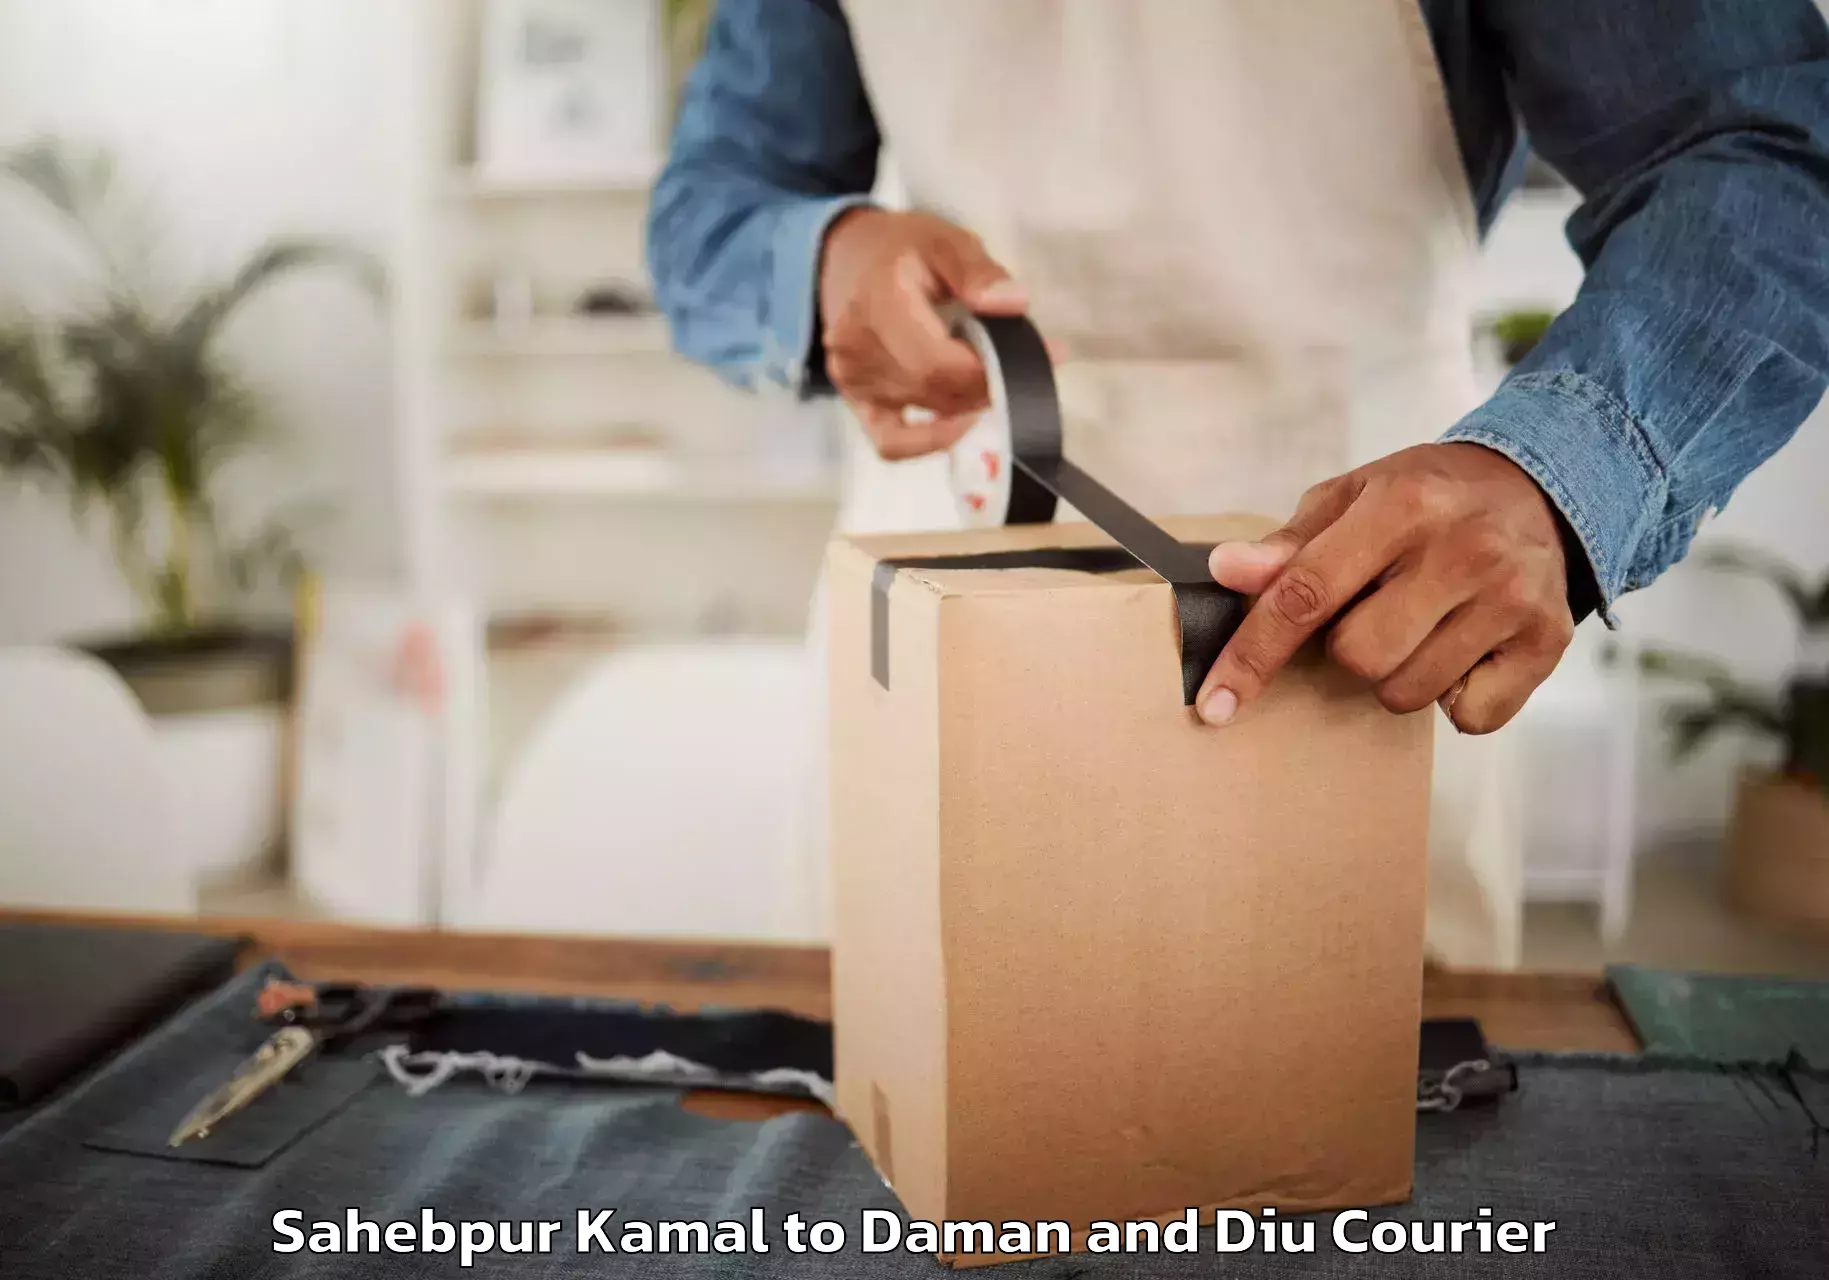 Quality moving company Sahebpur Kamal to Diu